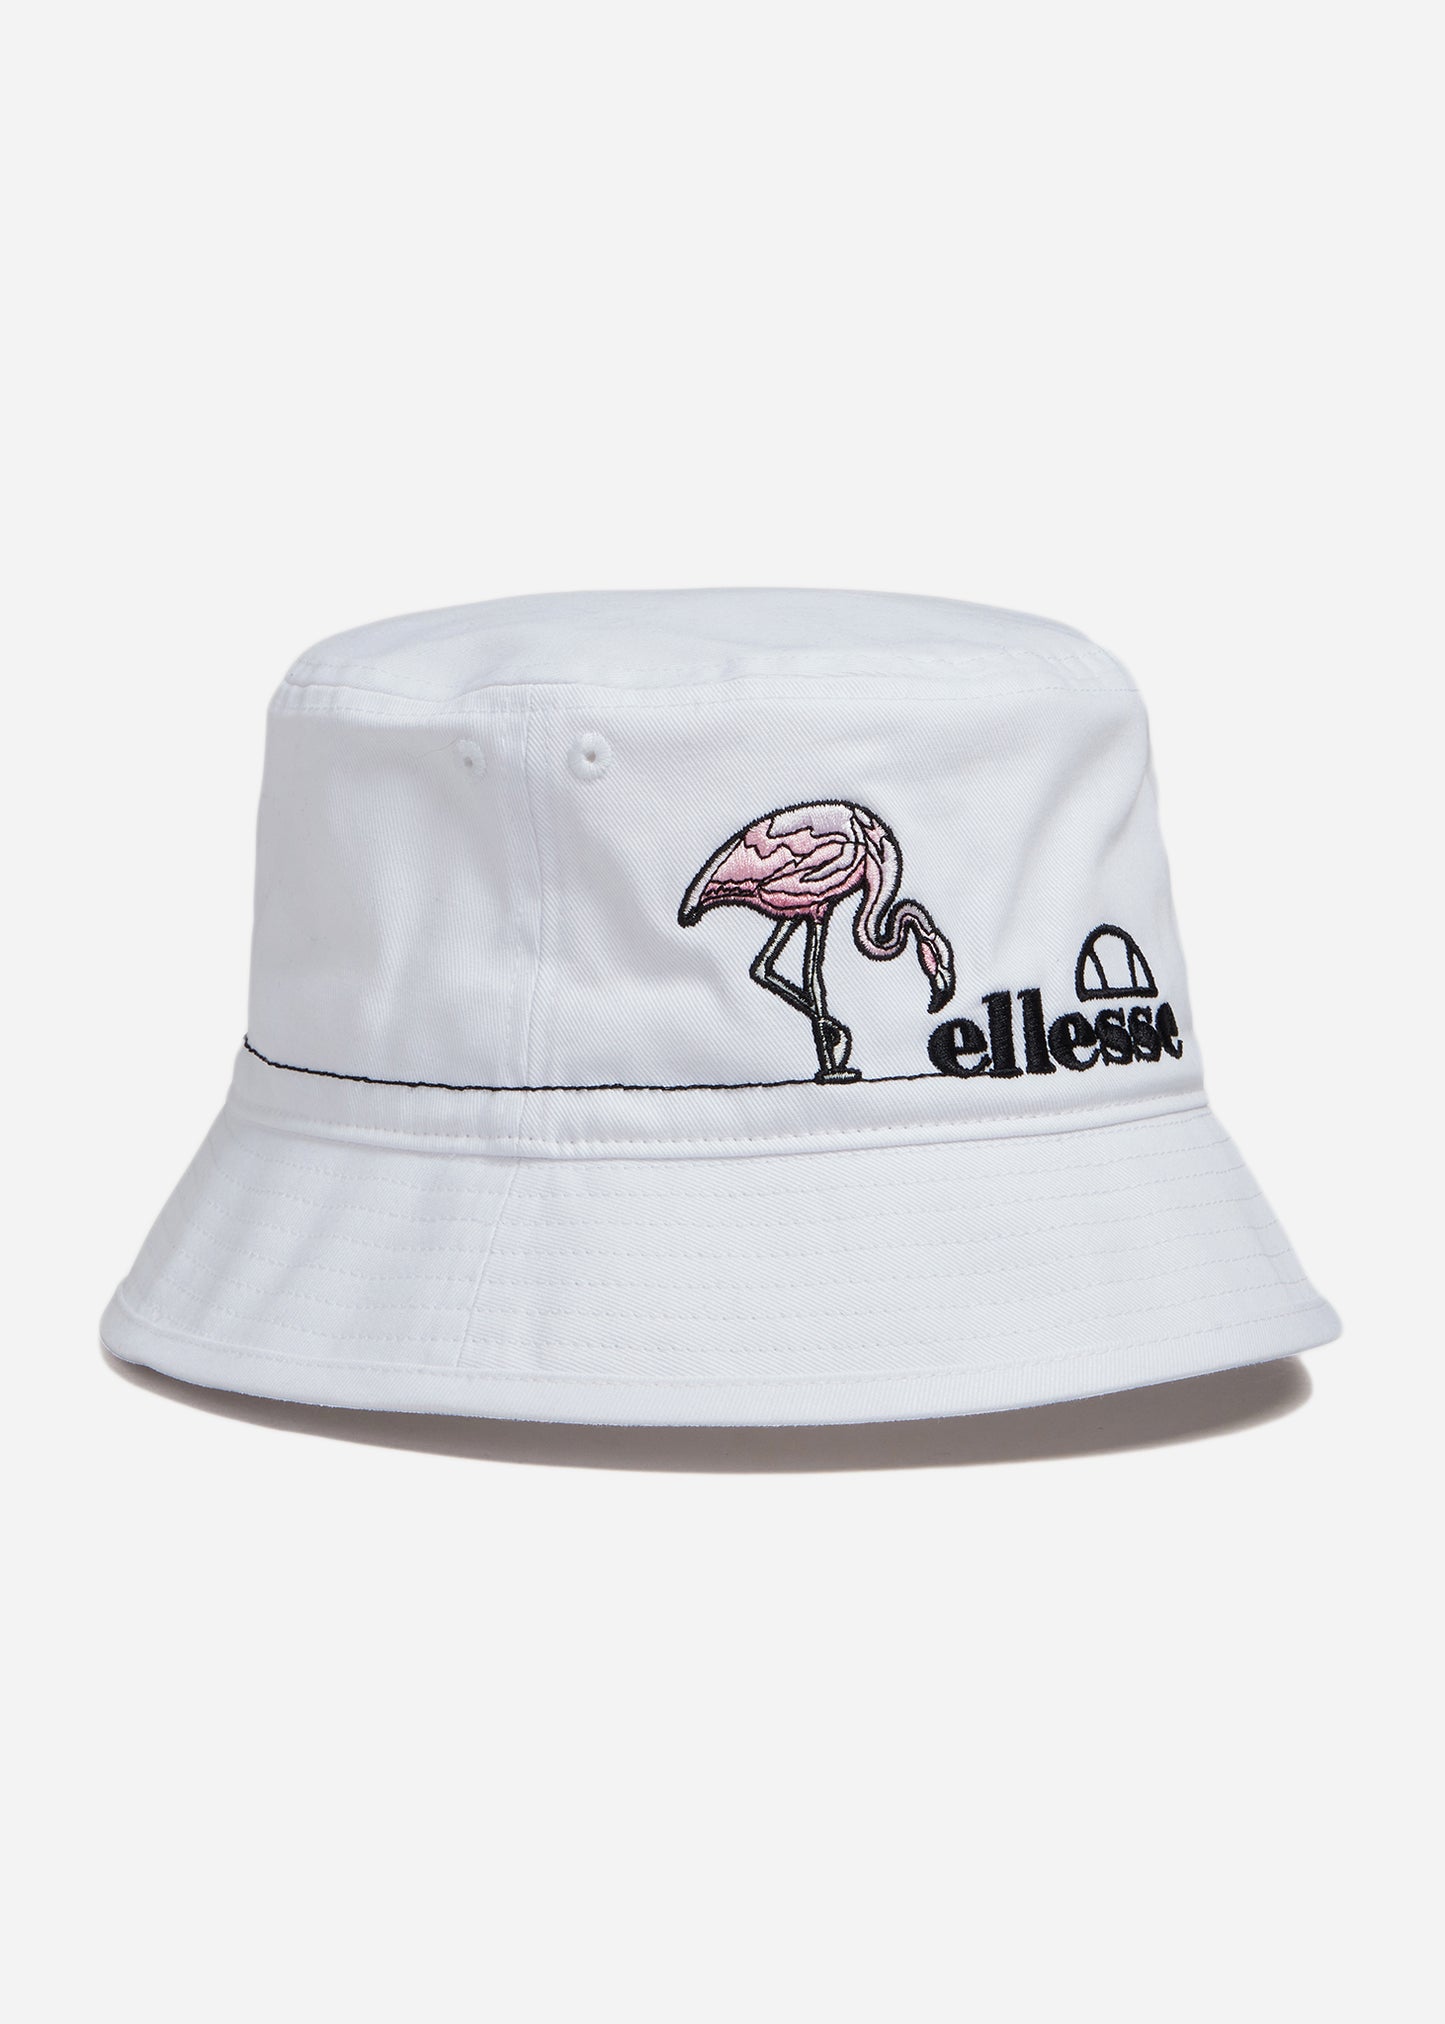 Zendi bucket hat - white